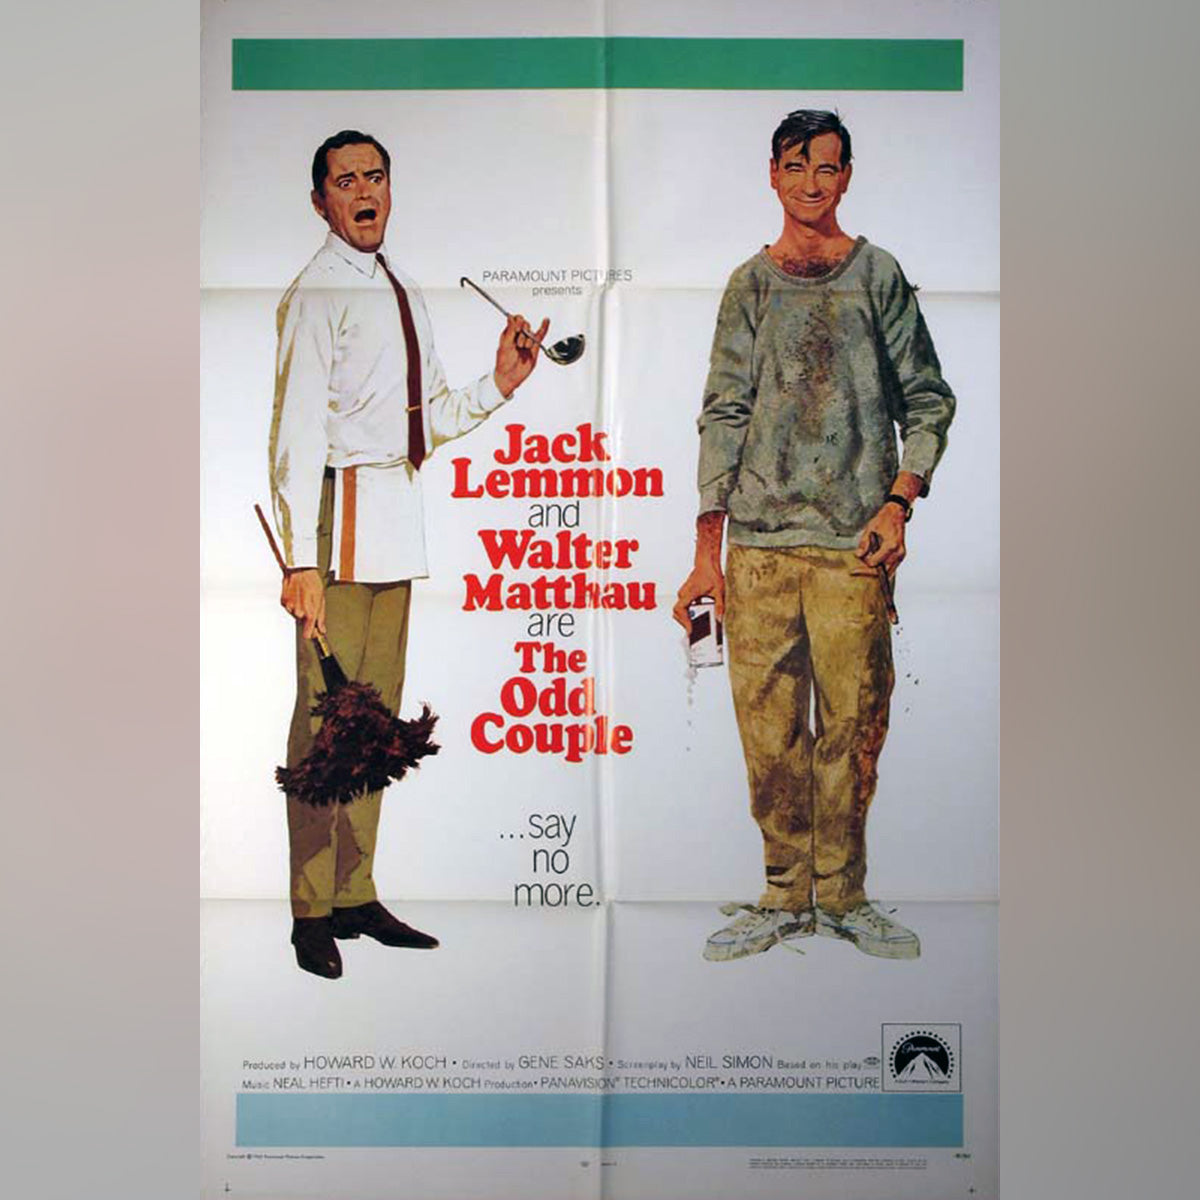 Original Movie Poster of Odd Couple, The (1968)